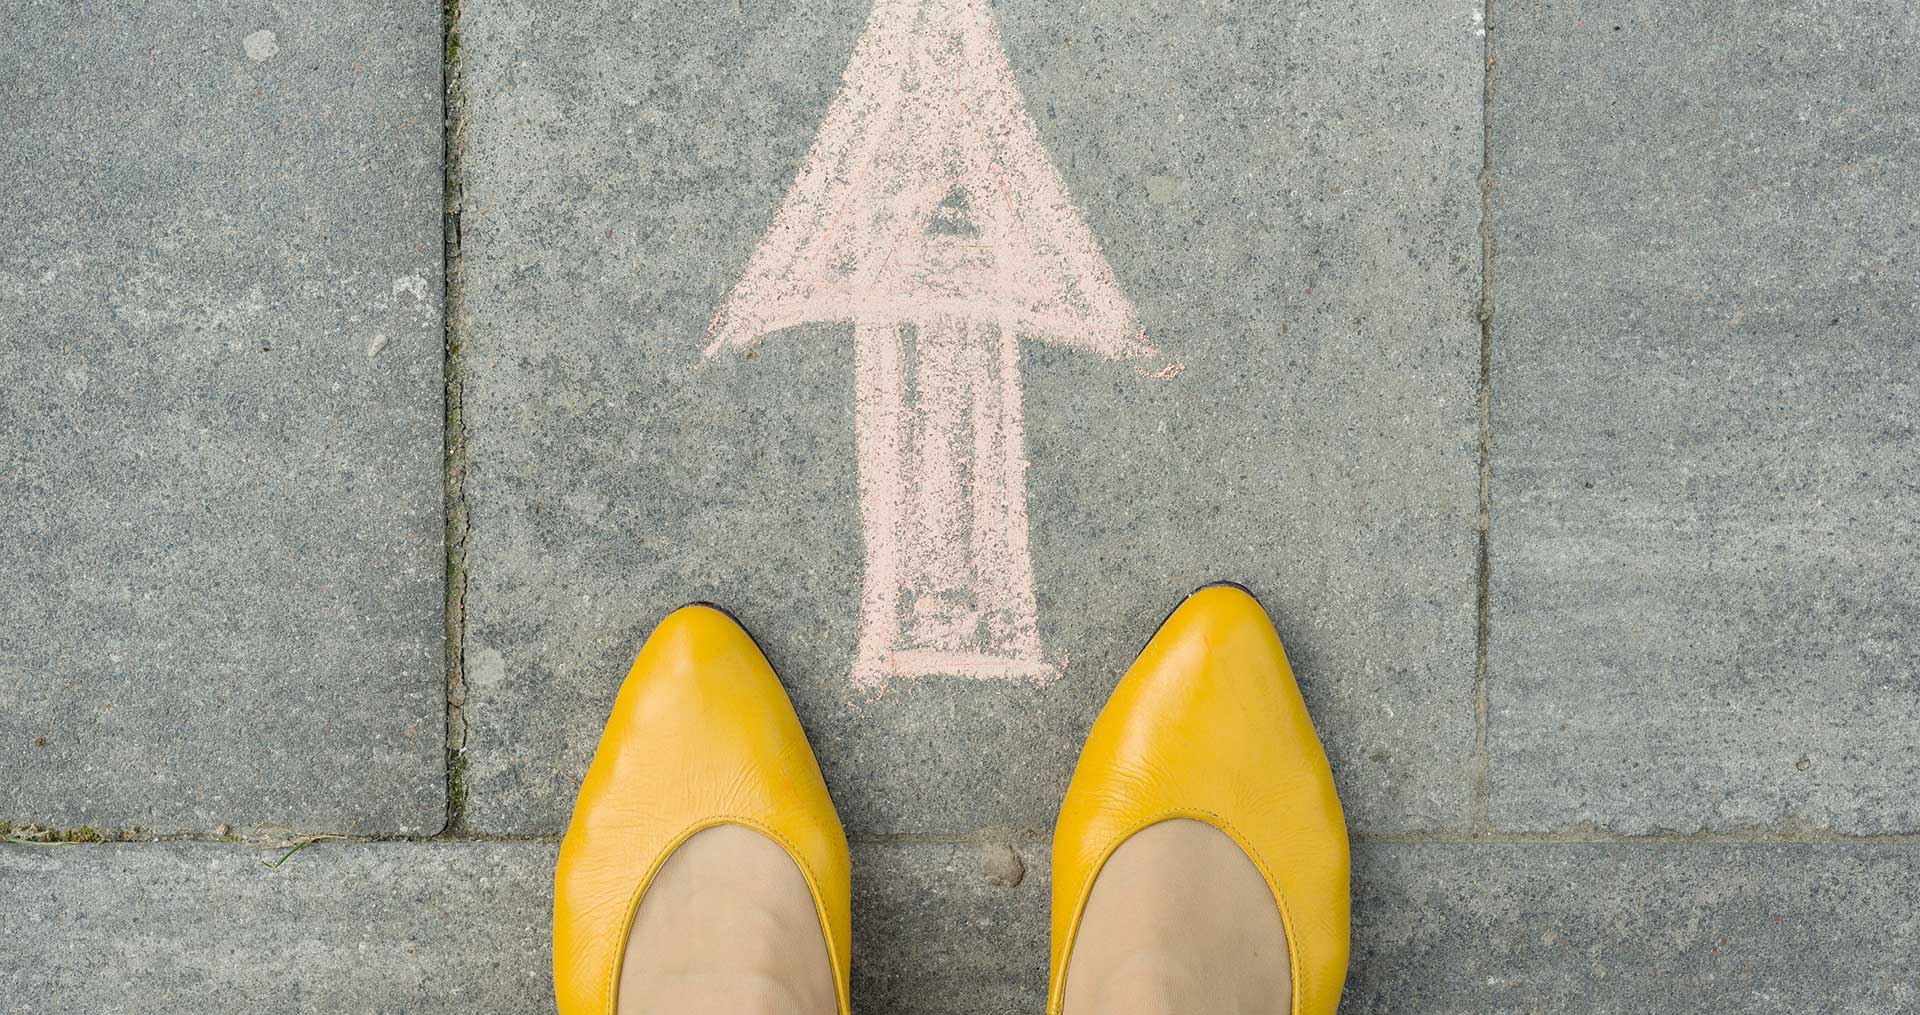 Two feet in yellow heels in front of an arrow on the sidewalk in chalk.